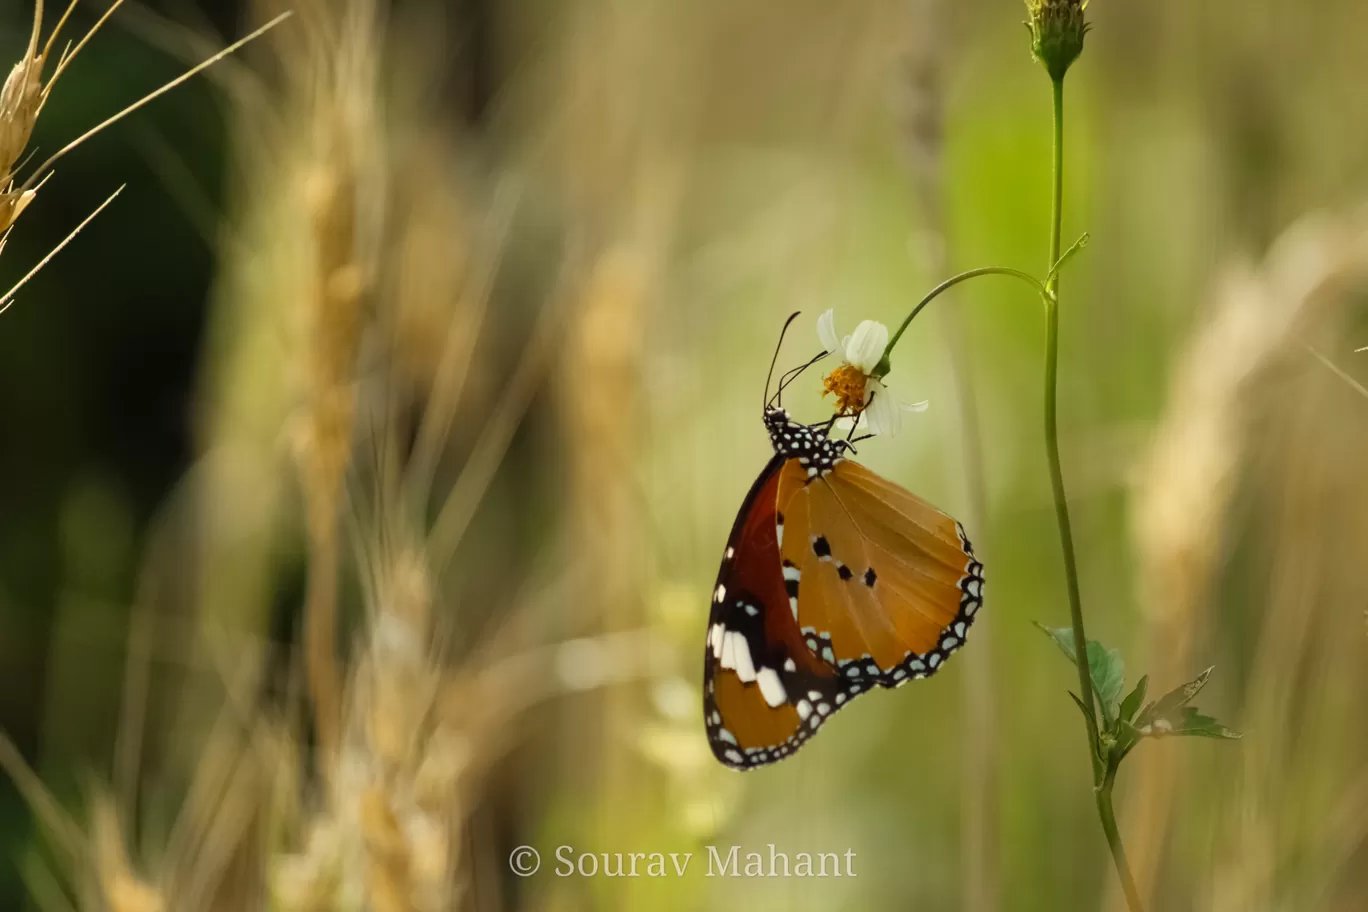 Photo of Dhaman By Sourav Mahant